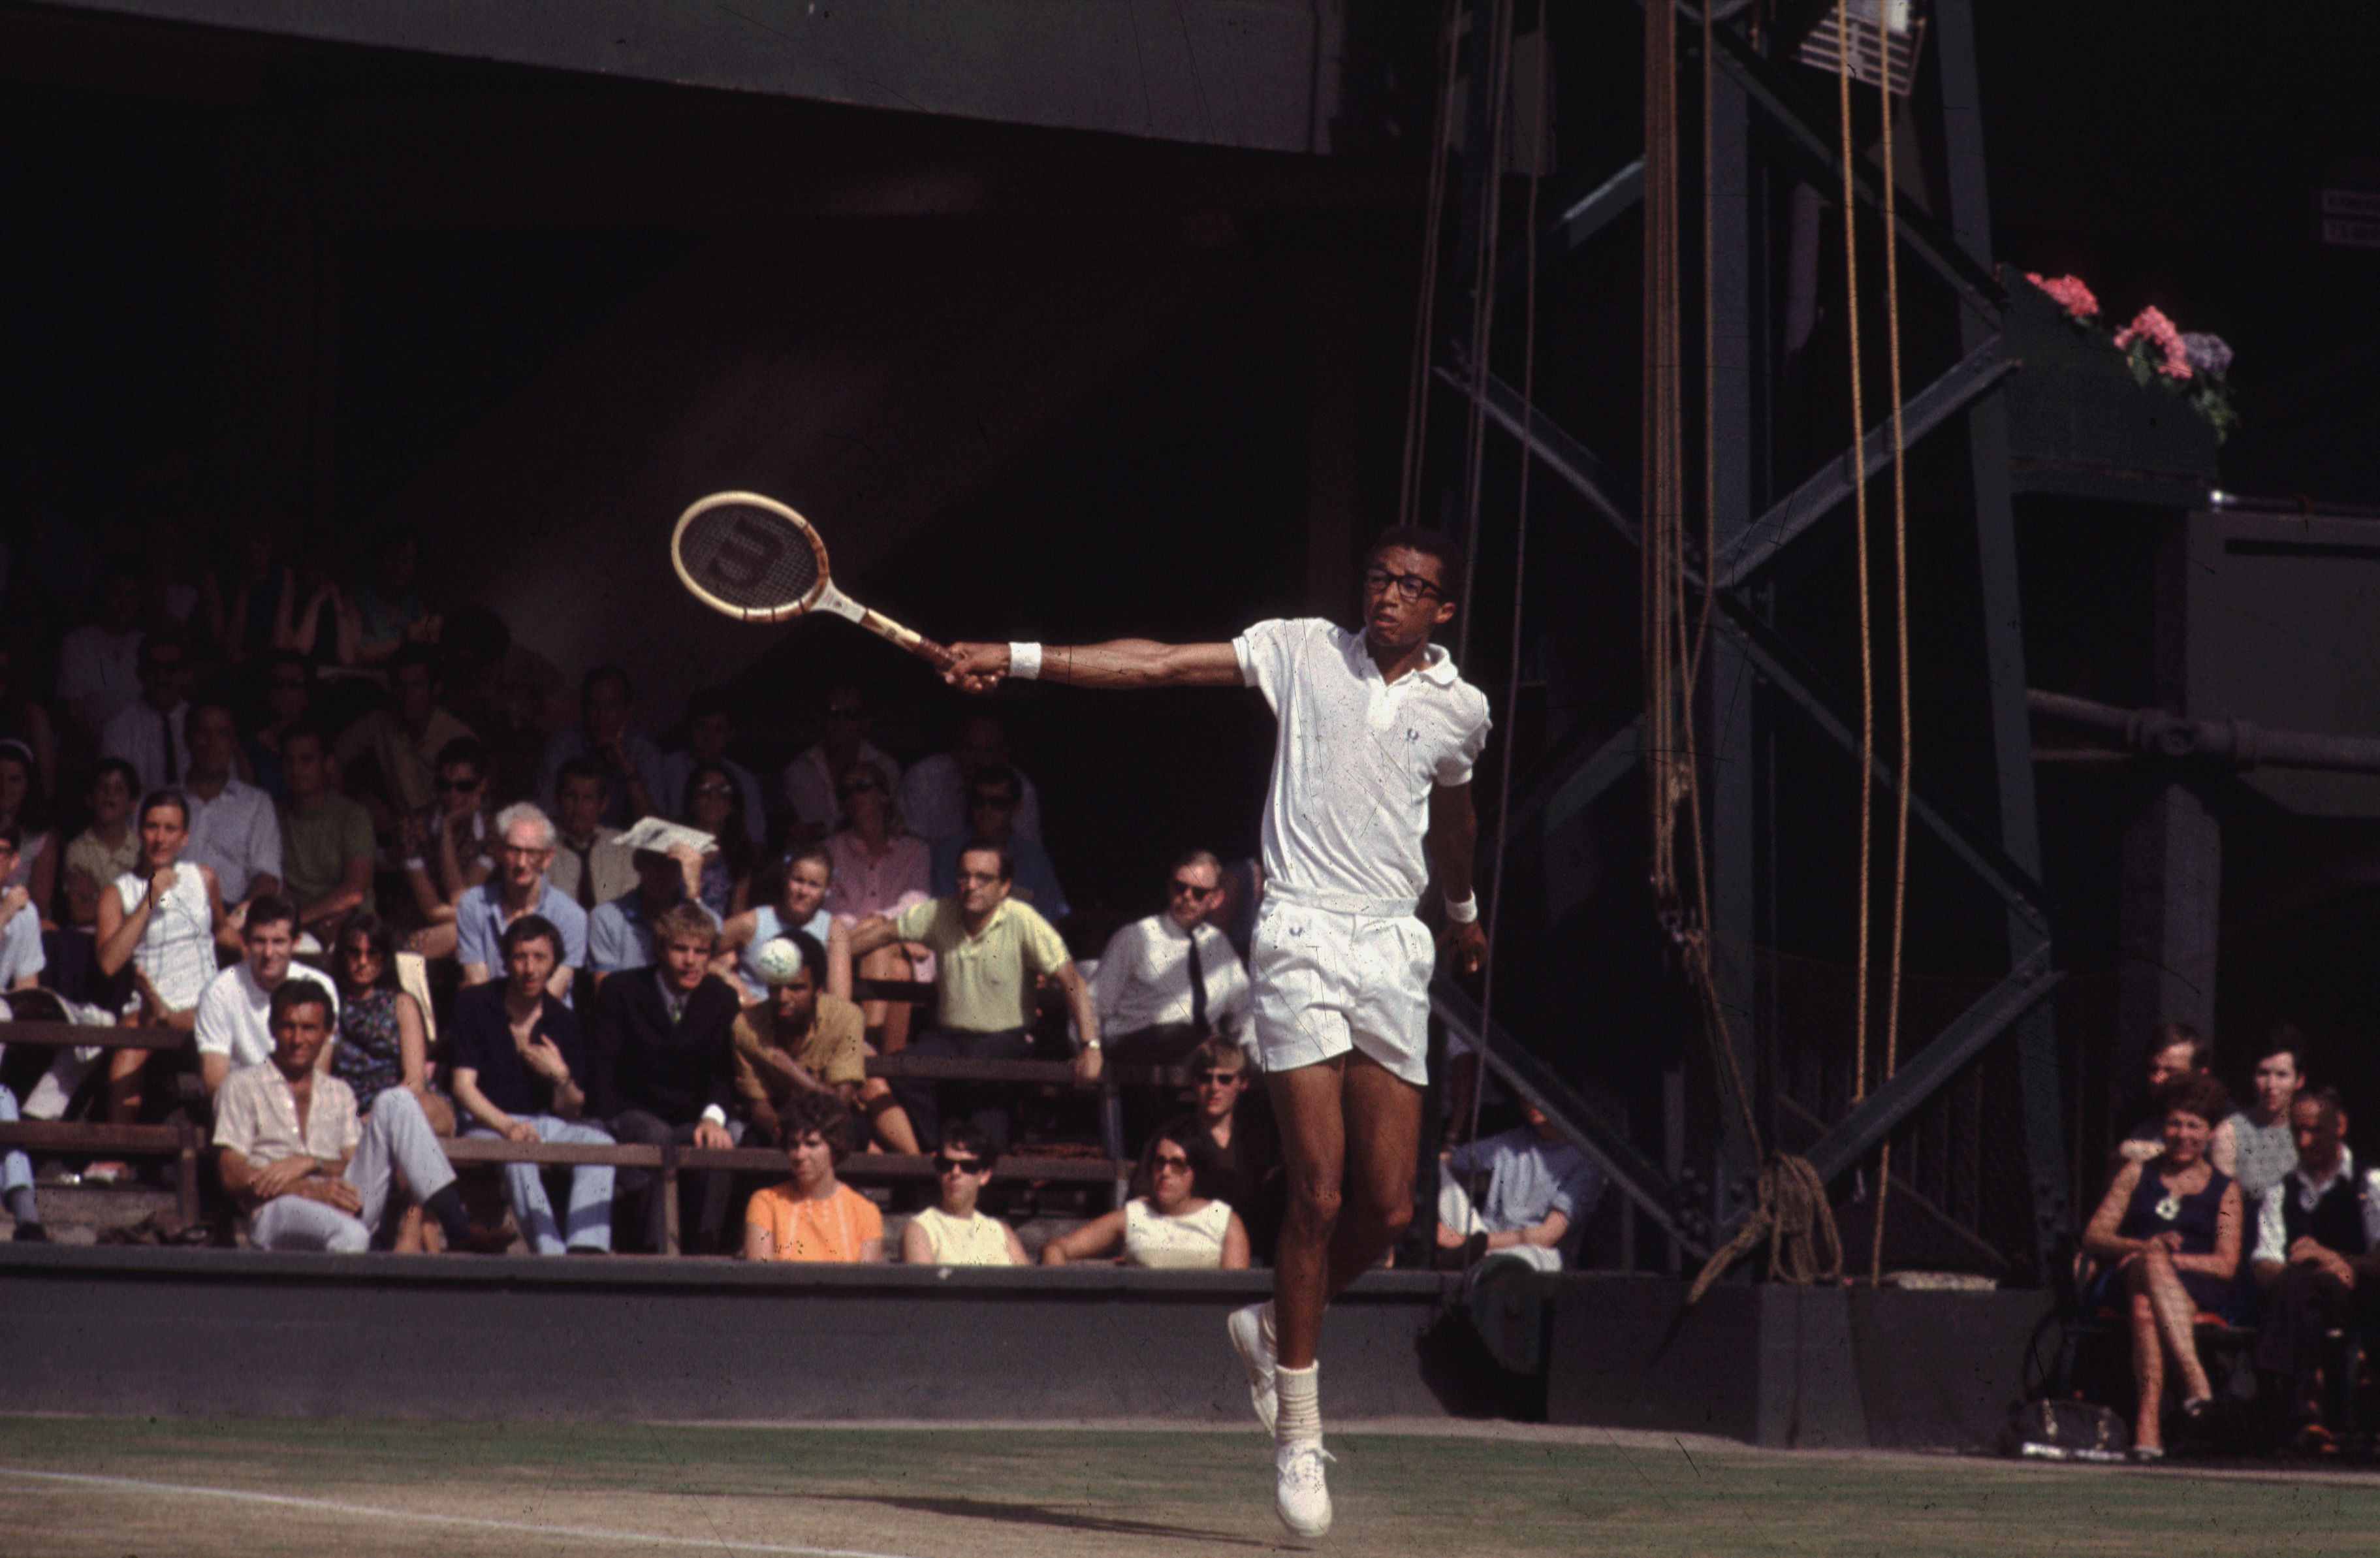 Arthur Robert Ashe Jr remains the only black man to win the Wimbledon singles tennis Grand Slam